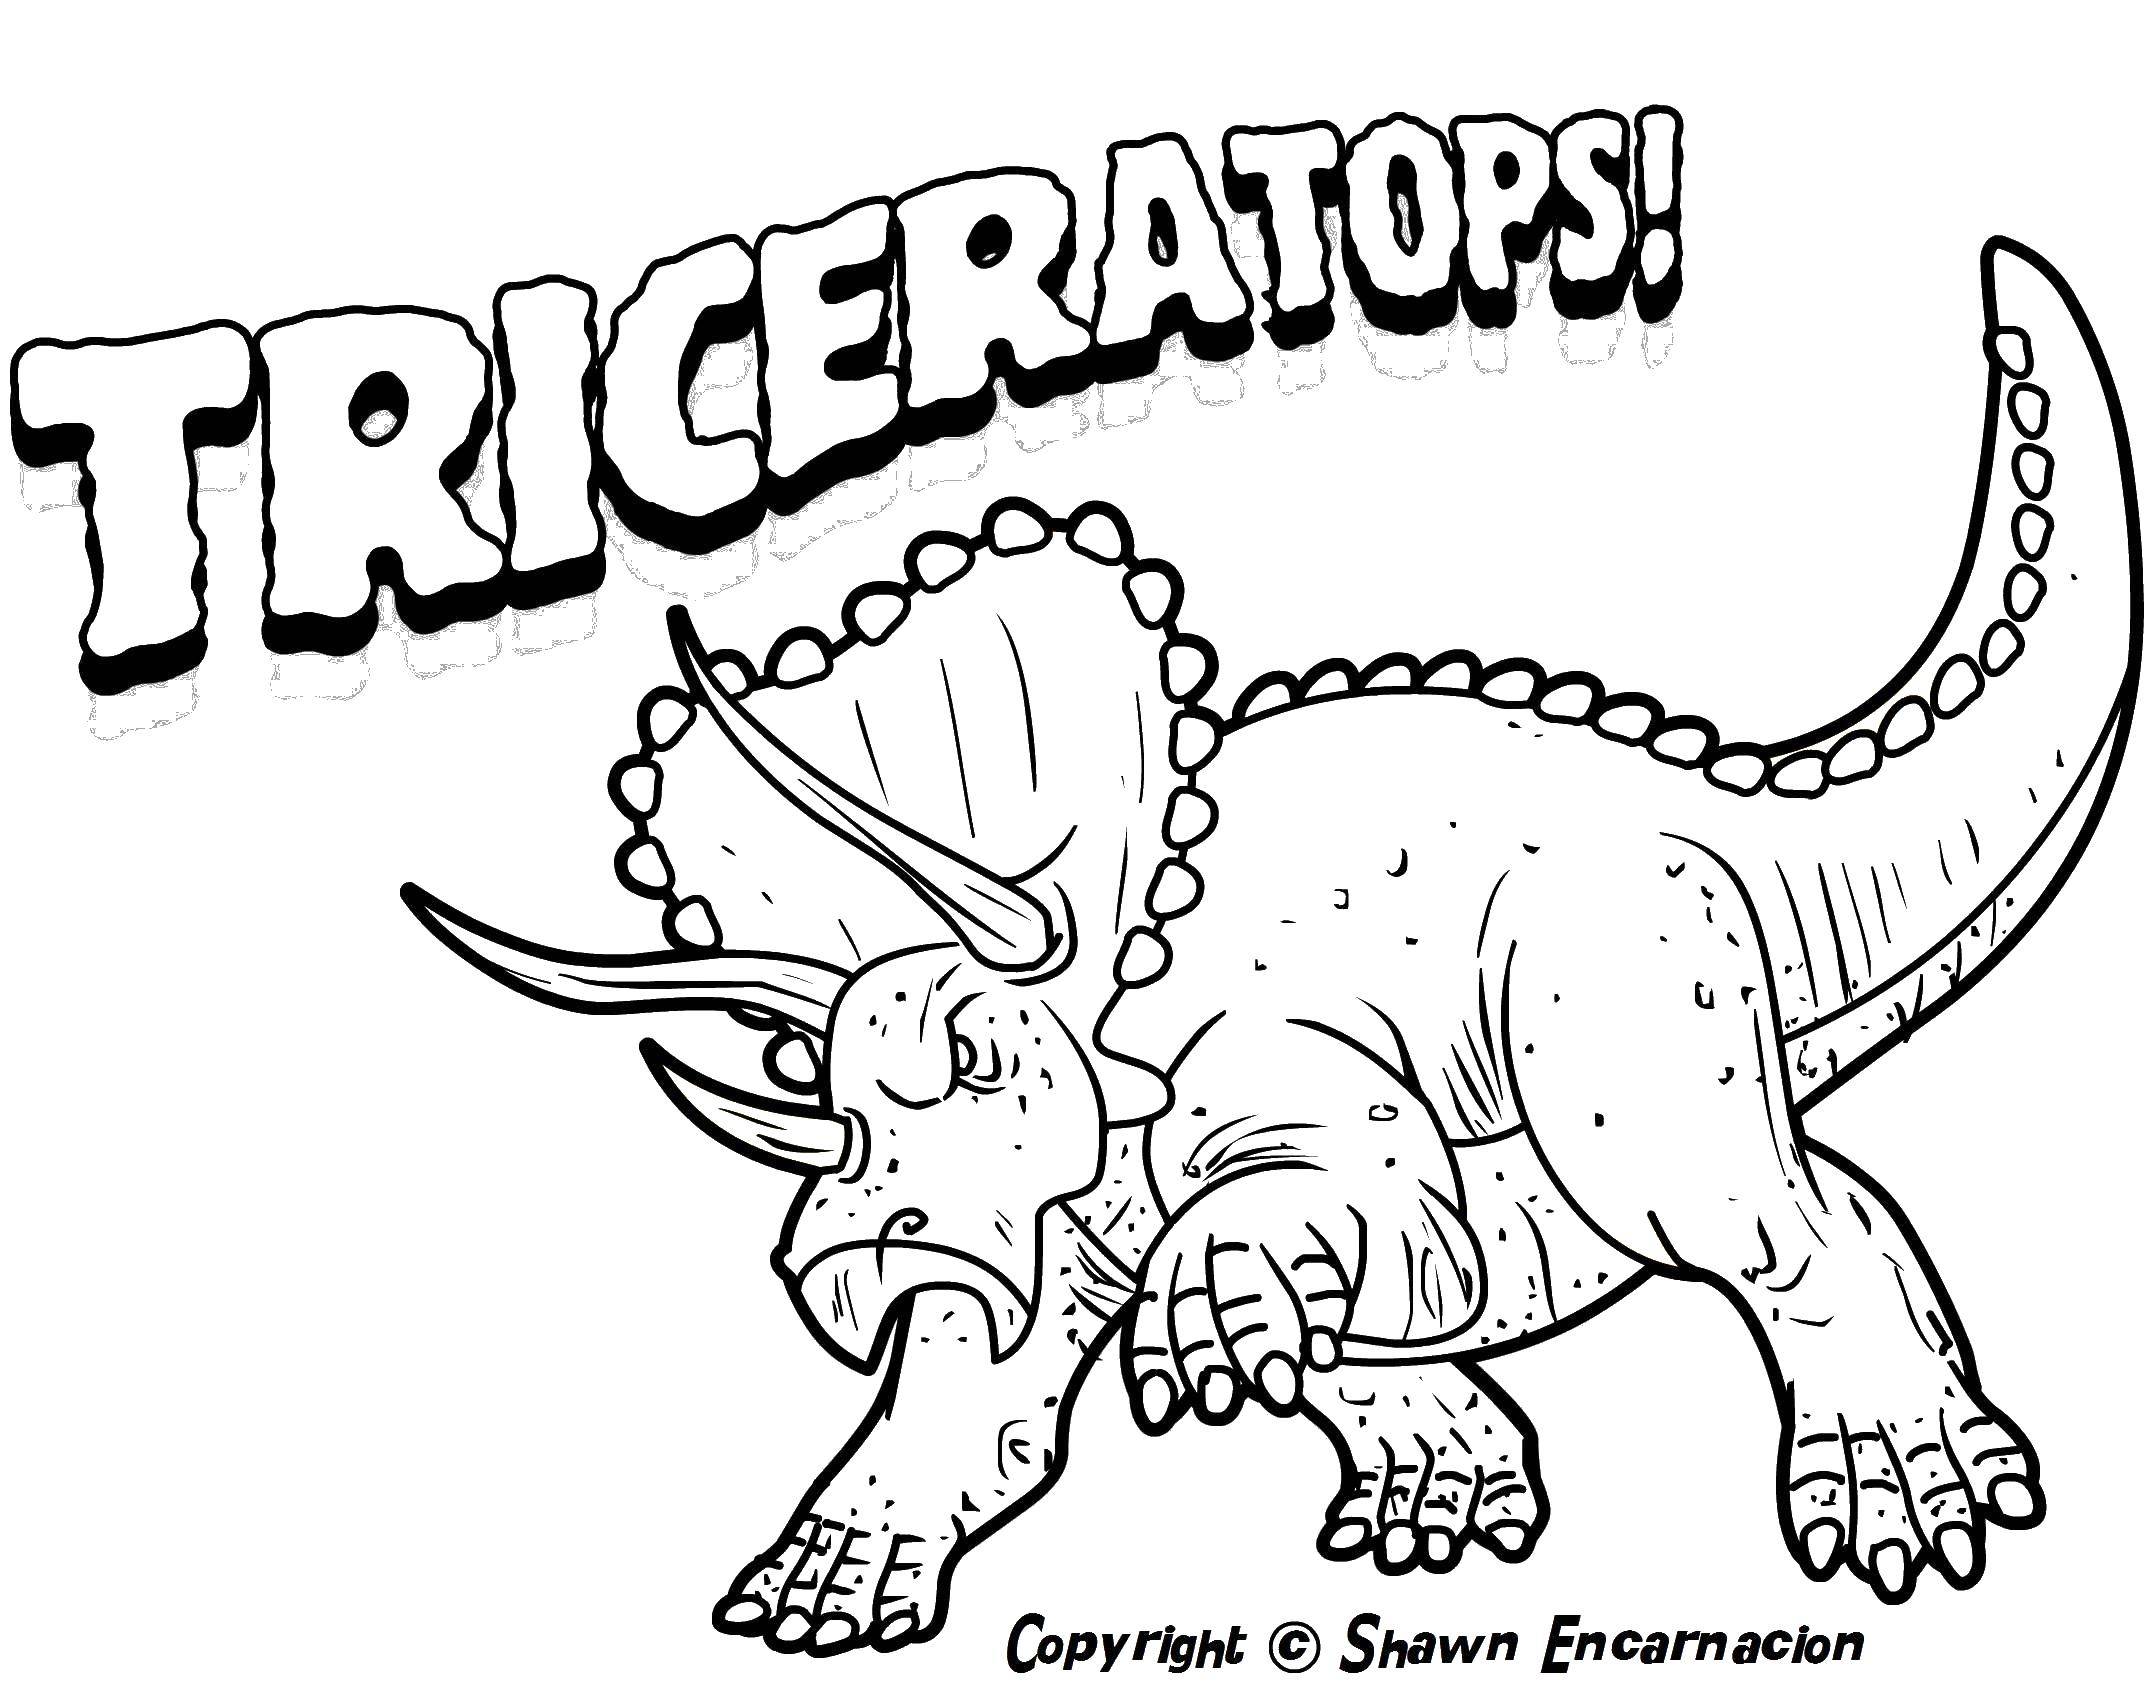 Coloring Triceratops. Category dinosaur. Tags:  triceraptor, dinosaur.